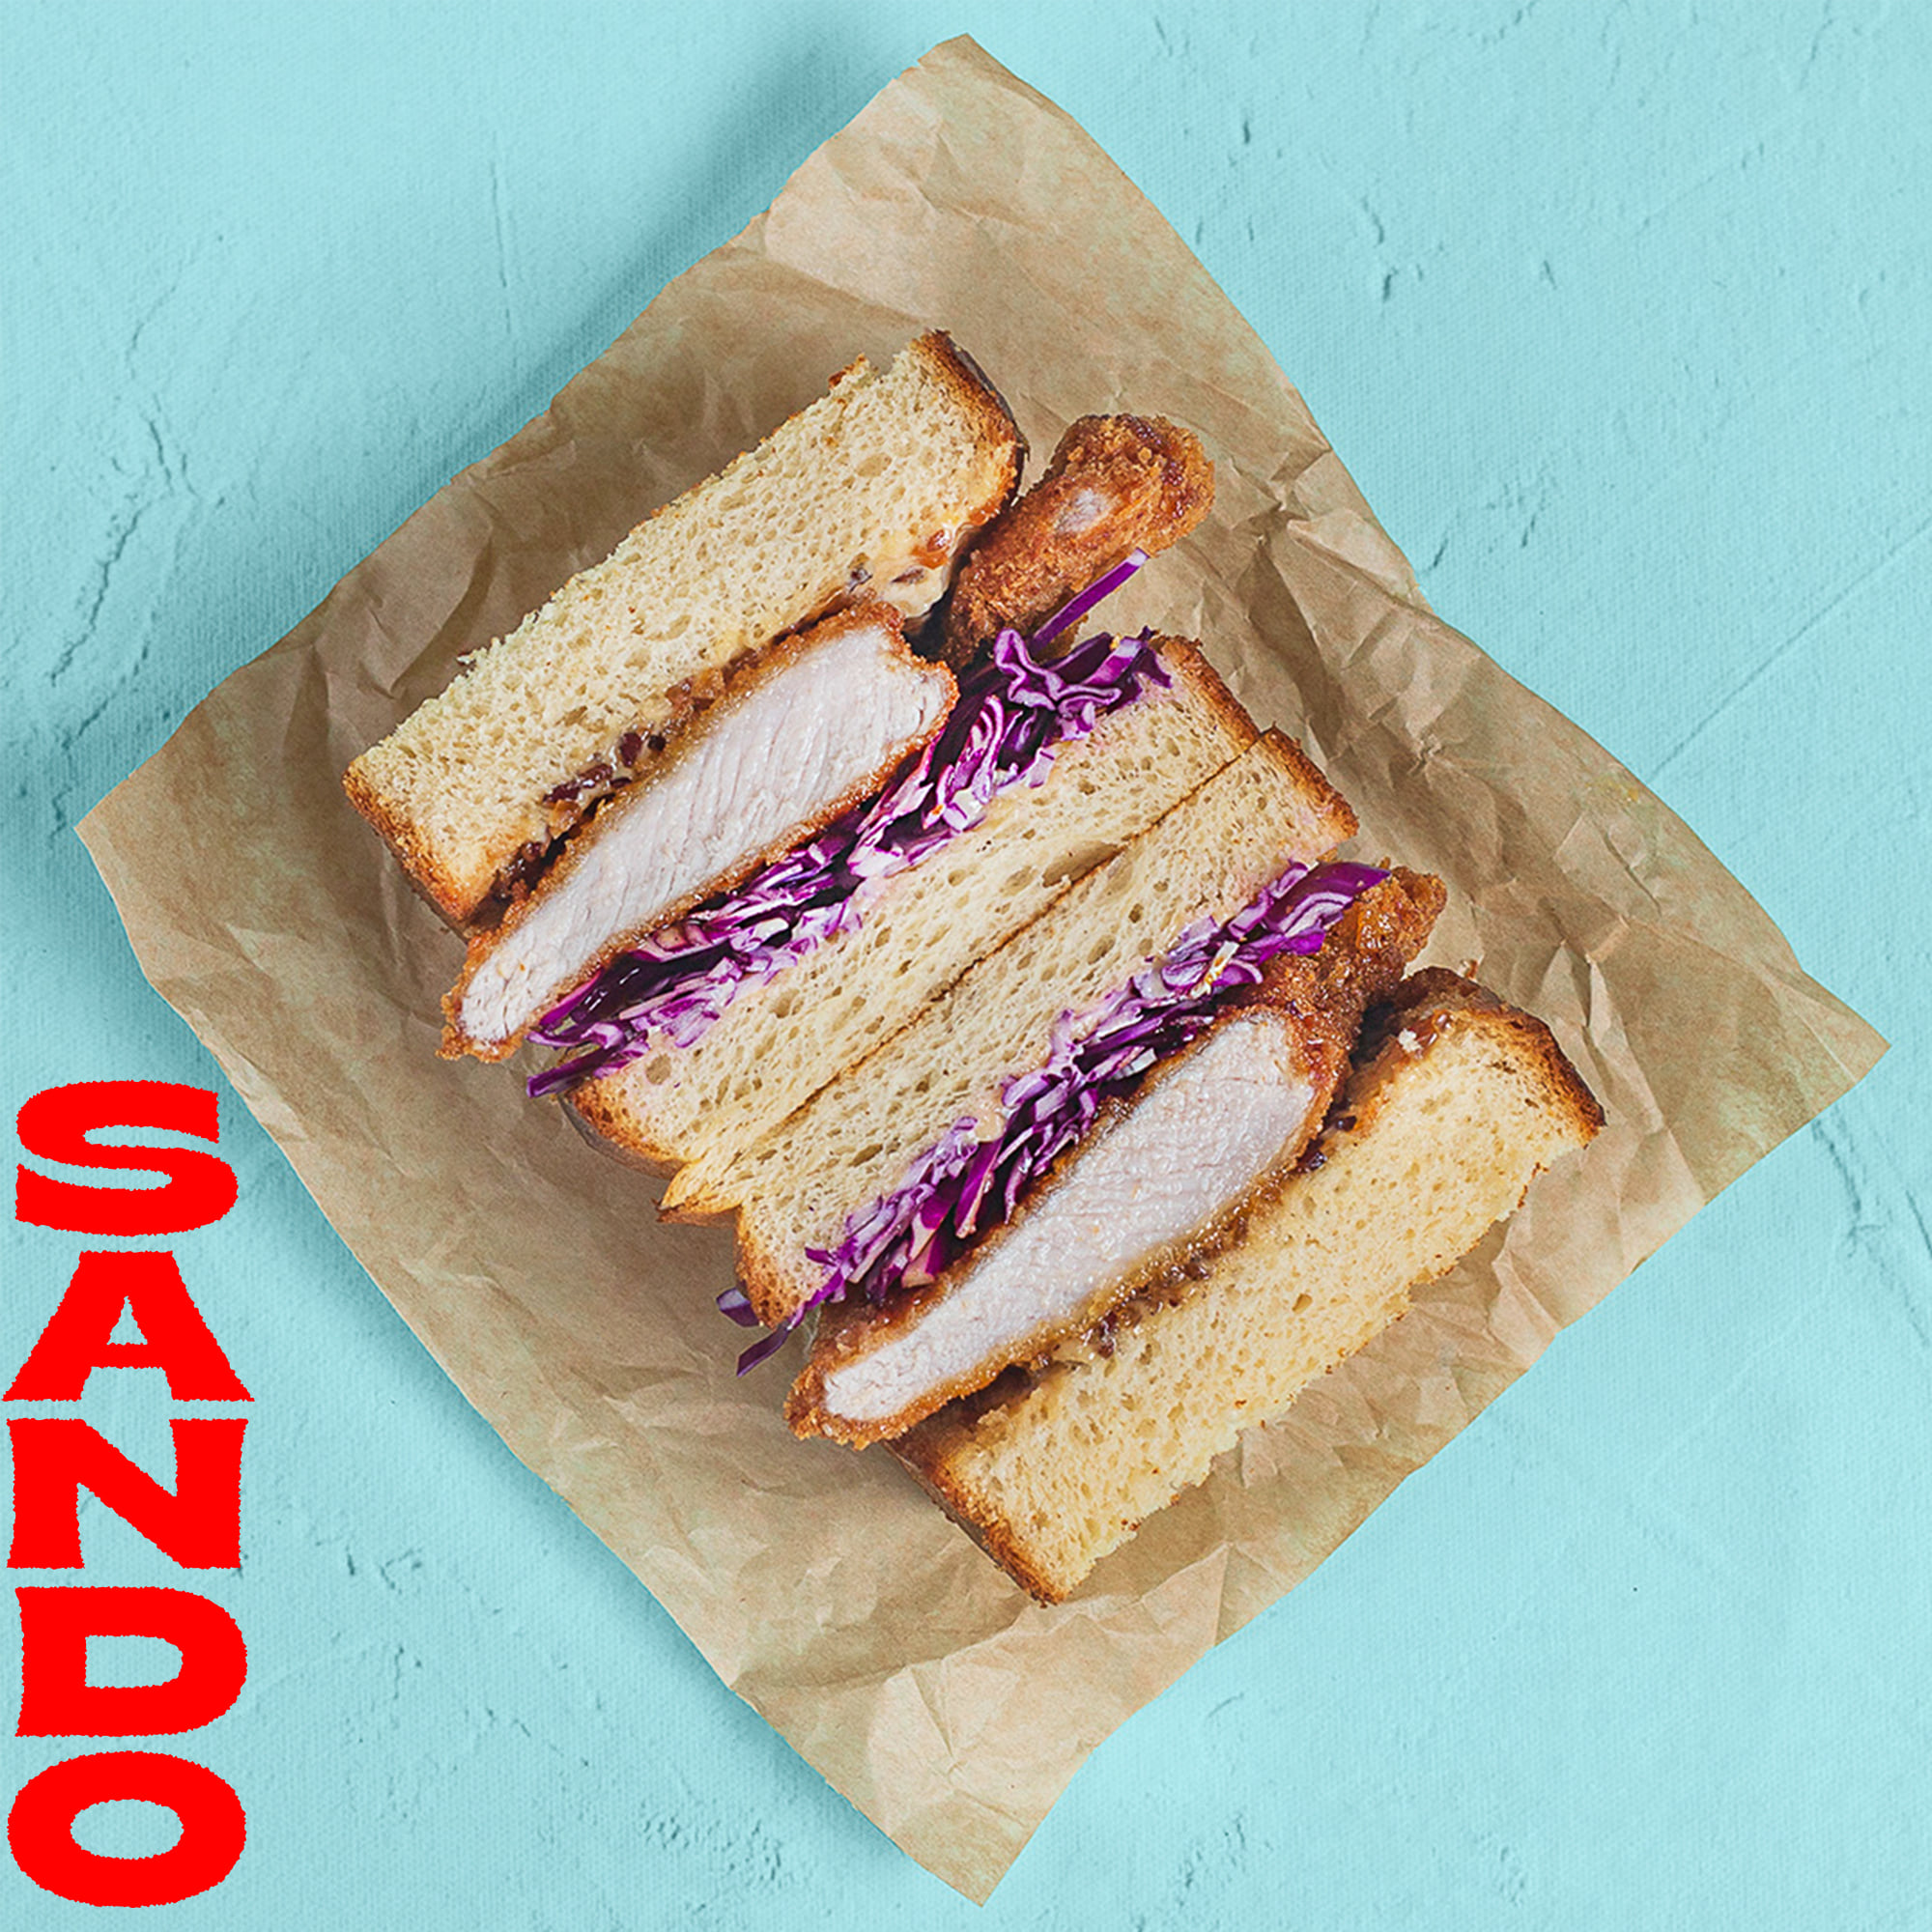 «Sando»: Το ιαπωνικό σάντουιτς που αν γνωρίσεις, θα το ερωτευτείς